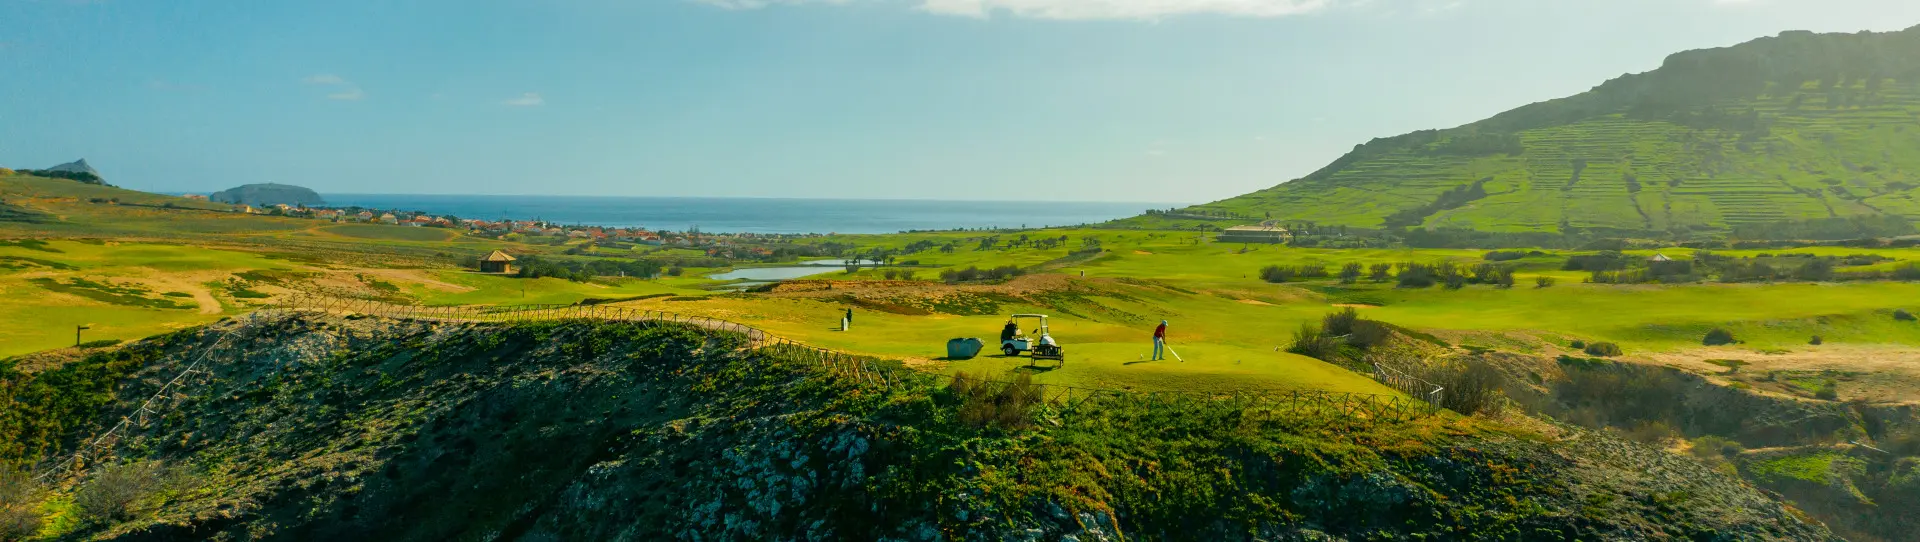 Portugal golf holidays - Porto Santo Golfe Premium Passport - Photo 2